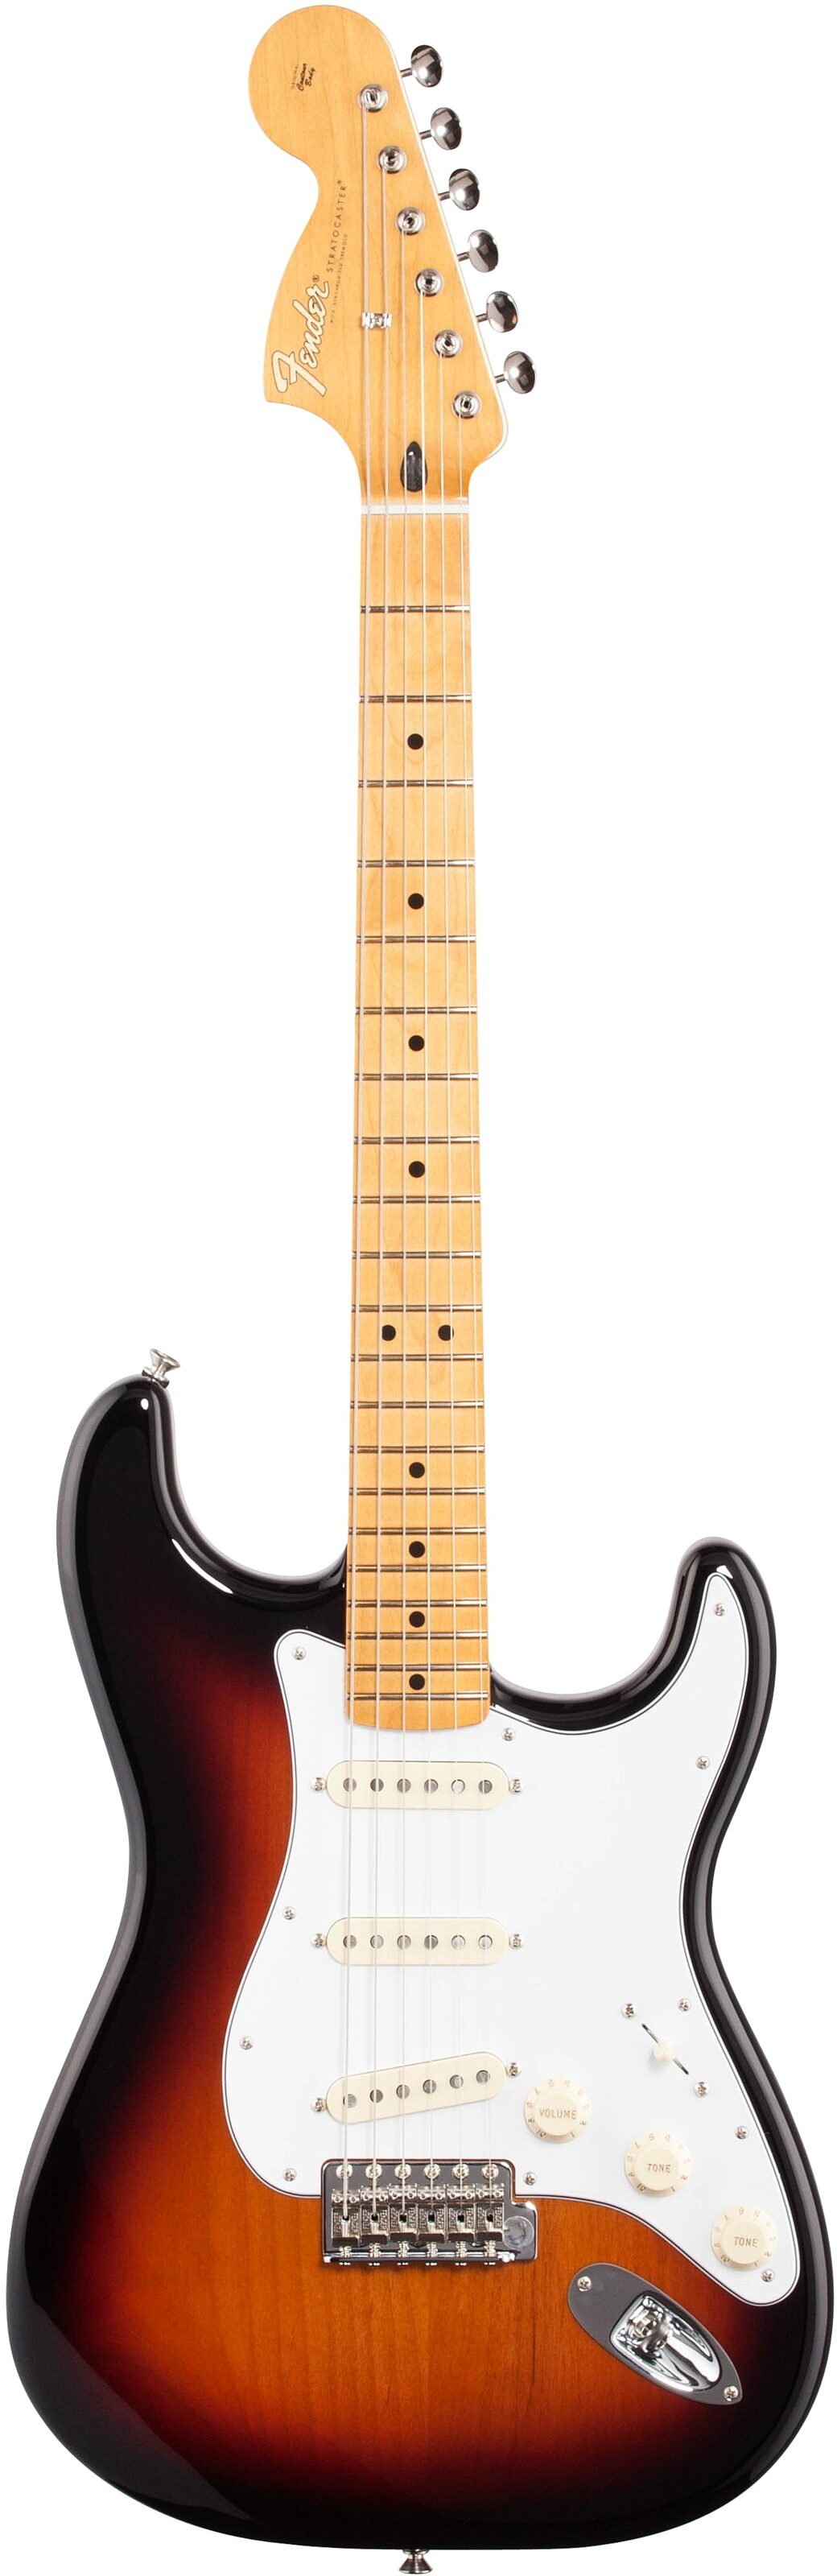 Fender Jimi Hendrix Stratocaster Electric Guitar